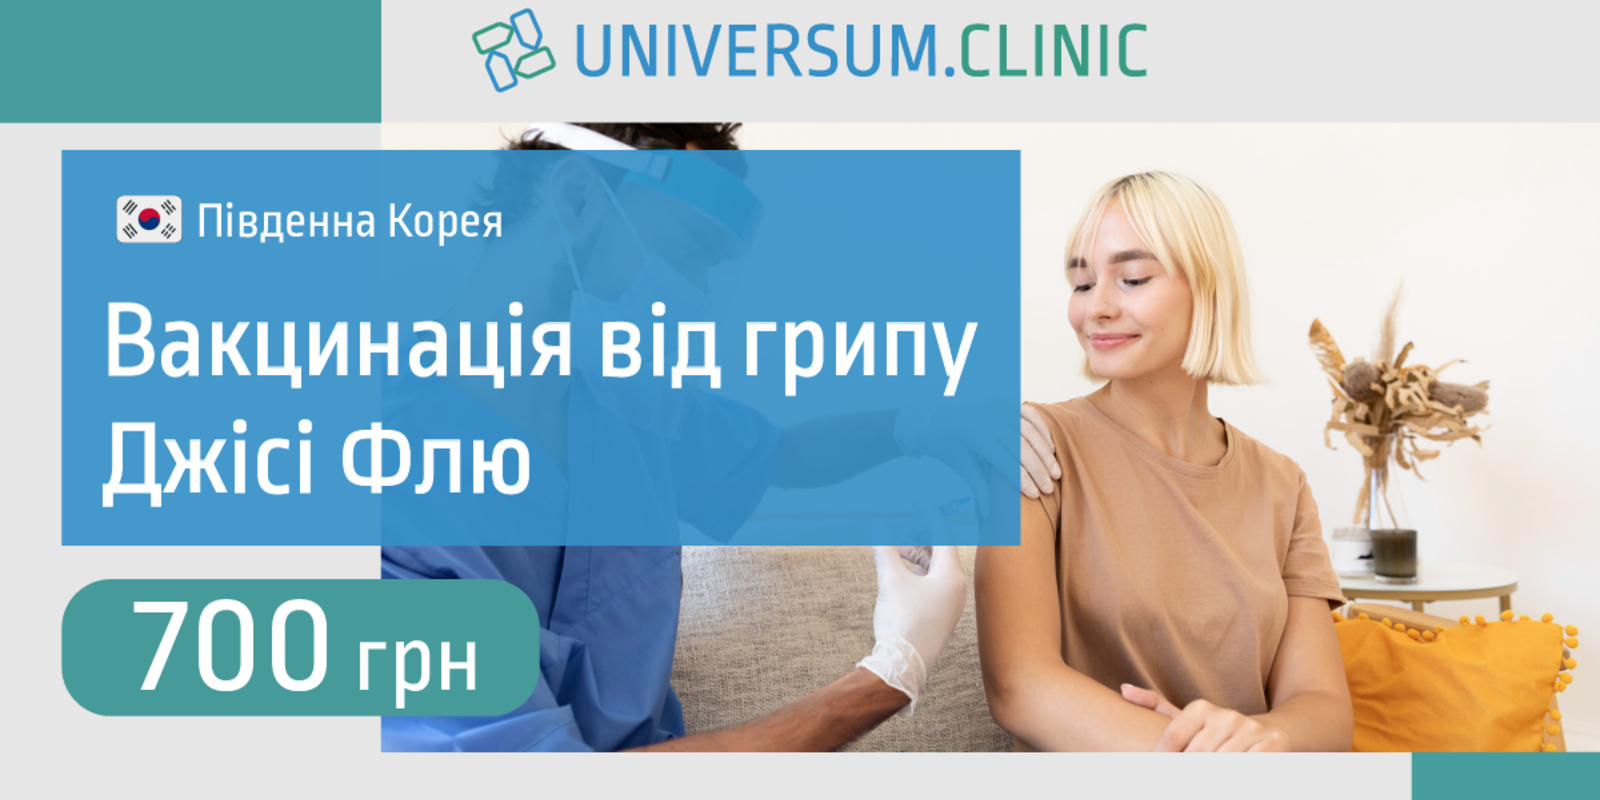 Universum Clinic - клініка сімейної медицини